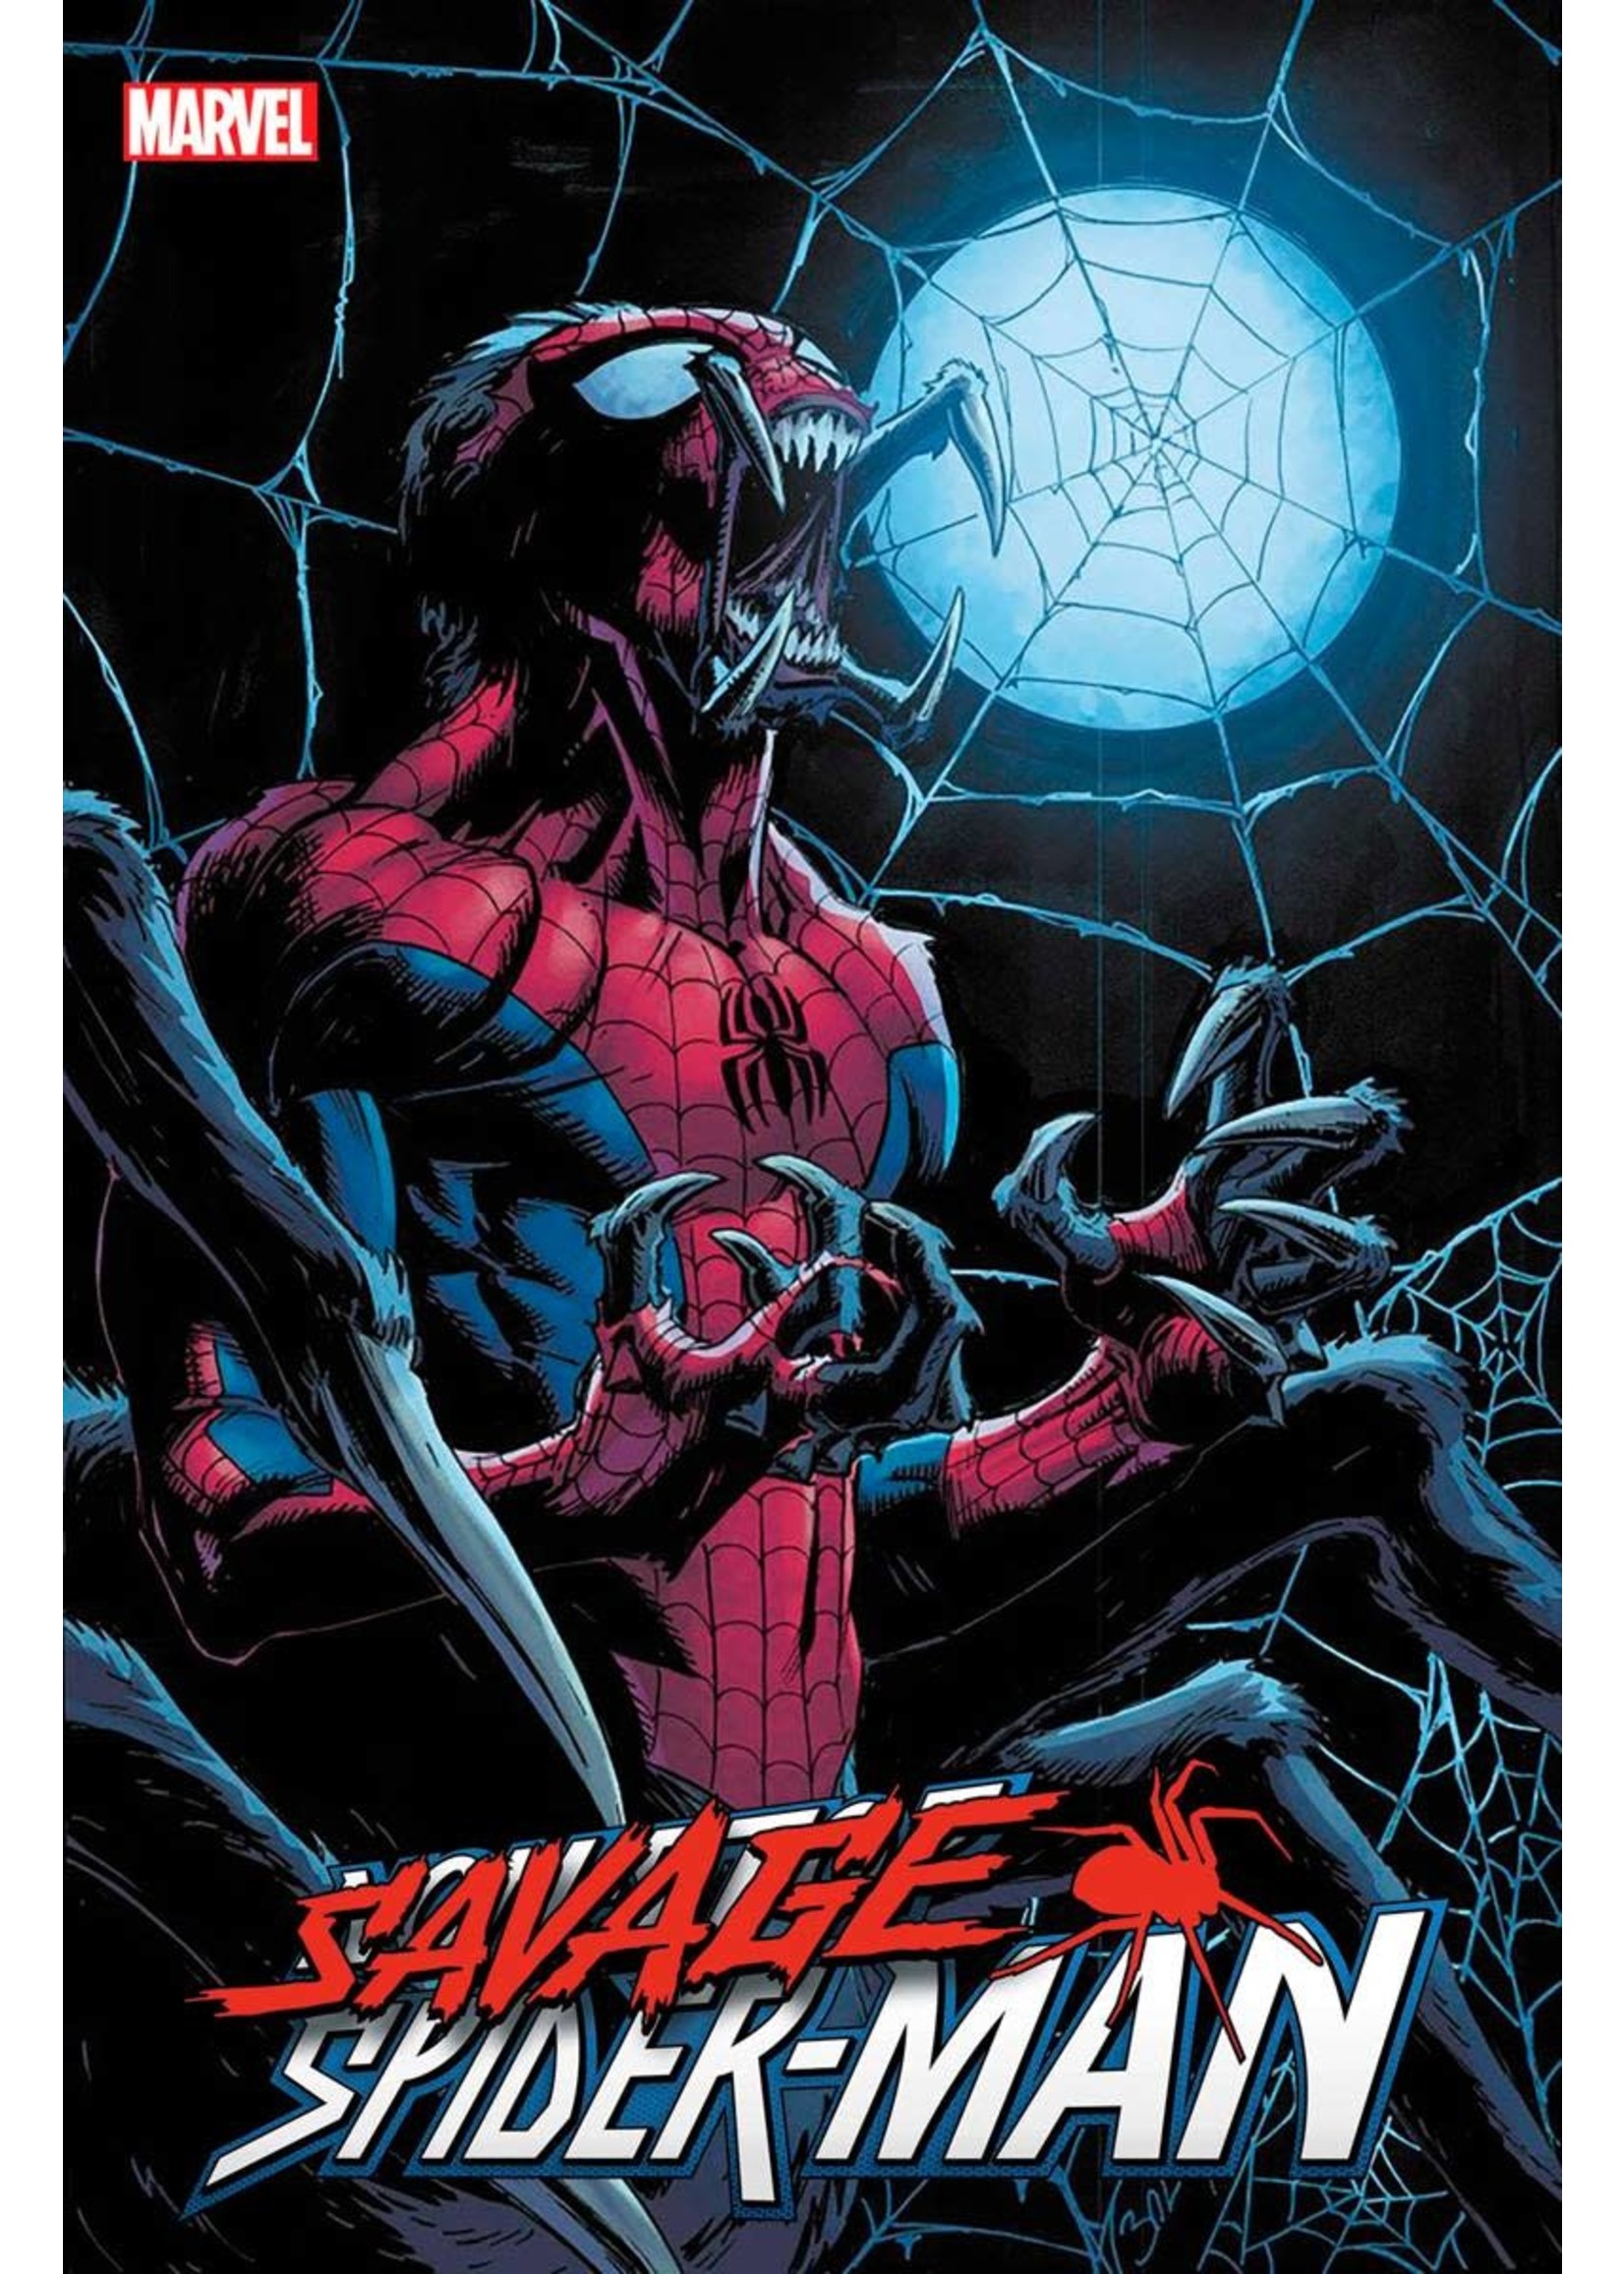 MARVEL COMICS SAVAGE SPIDER-MAN #3 BAGLEY VARIANT